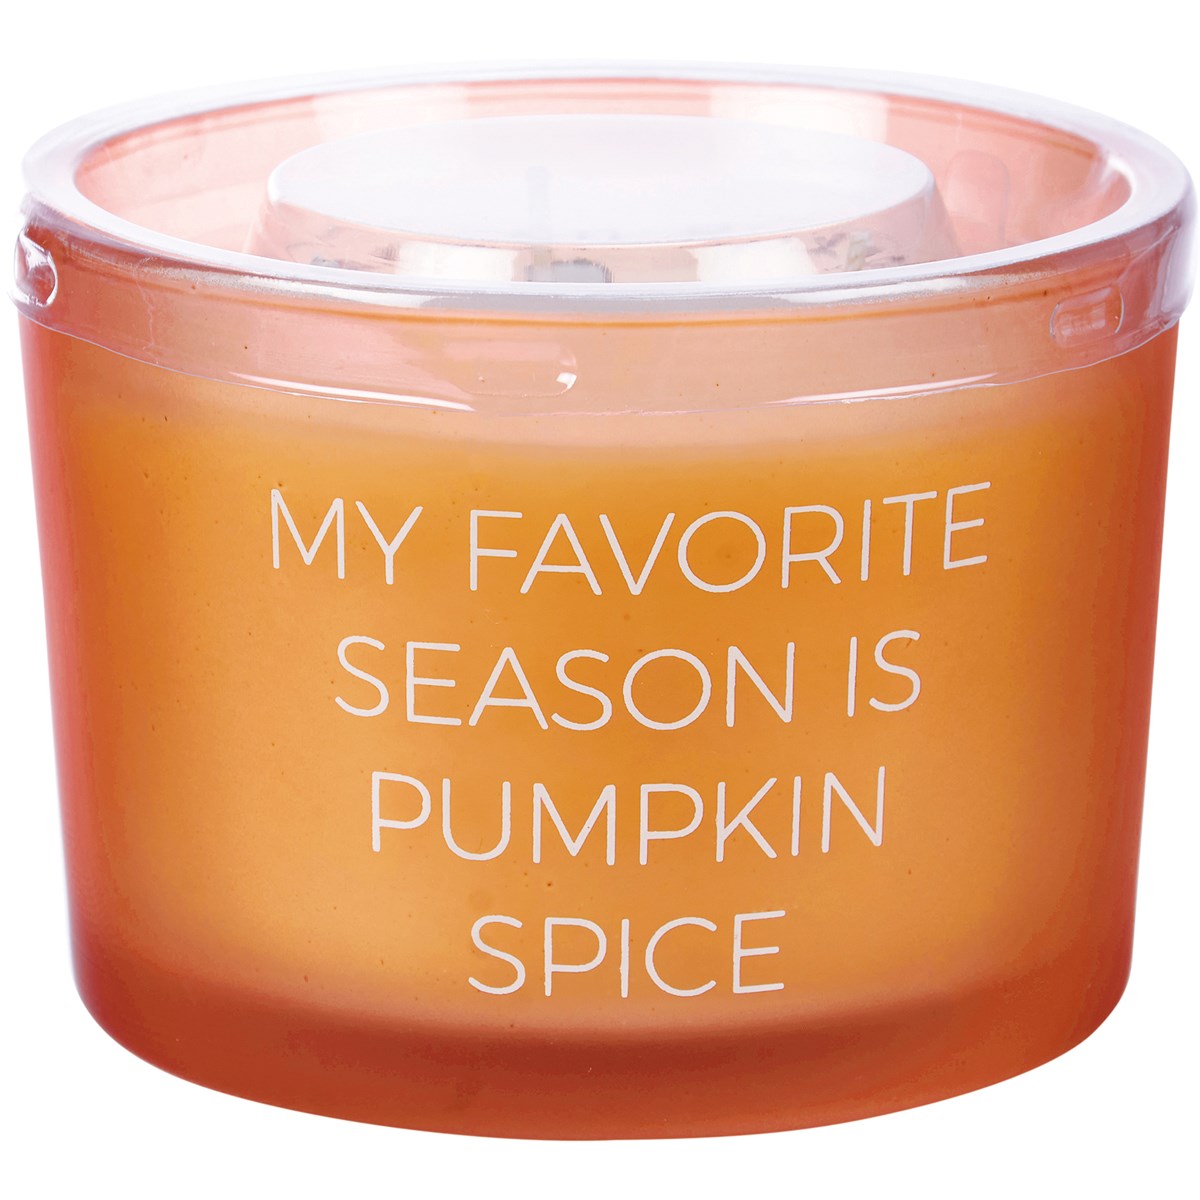 Favorite Season Pumpkin Spice Candle - Soy Wax, Glass, Cotton